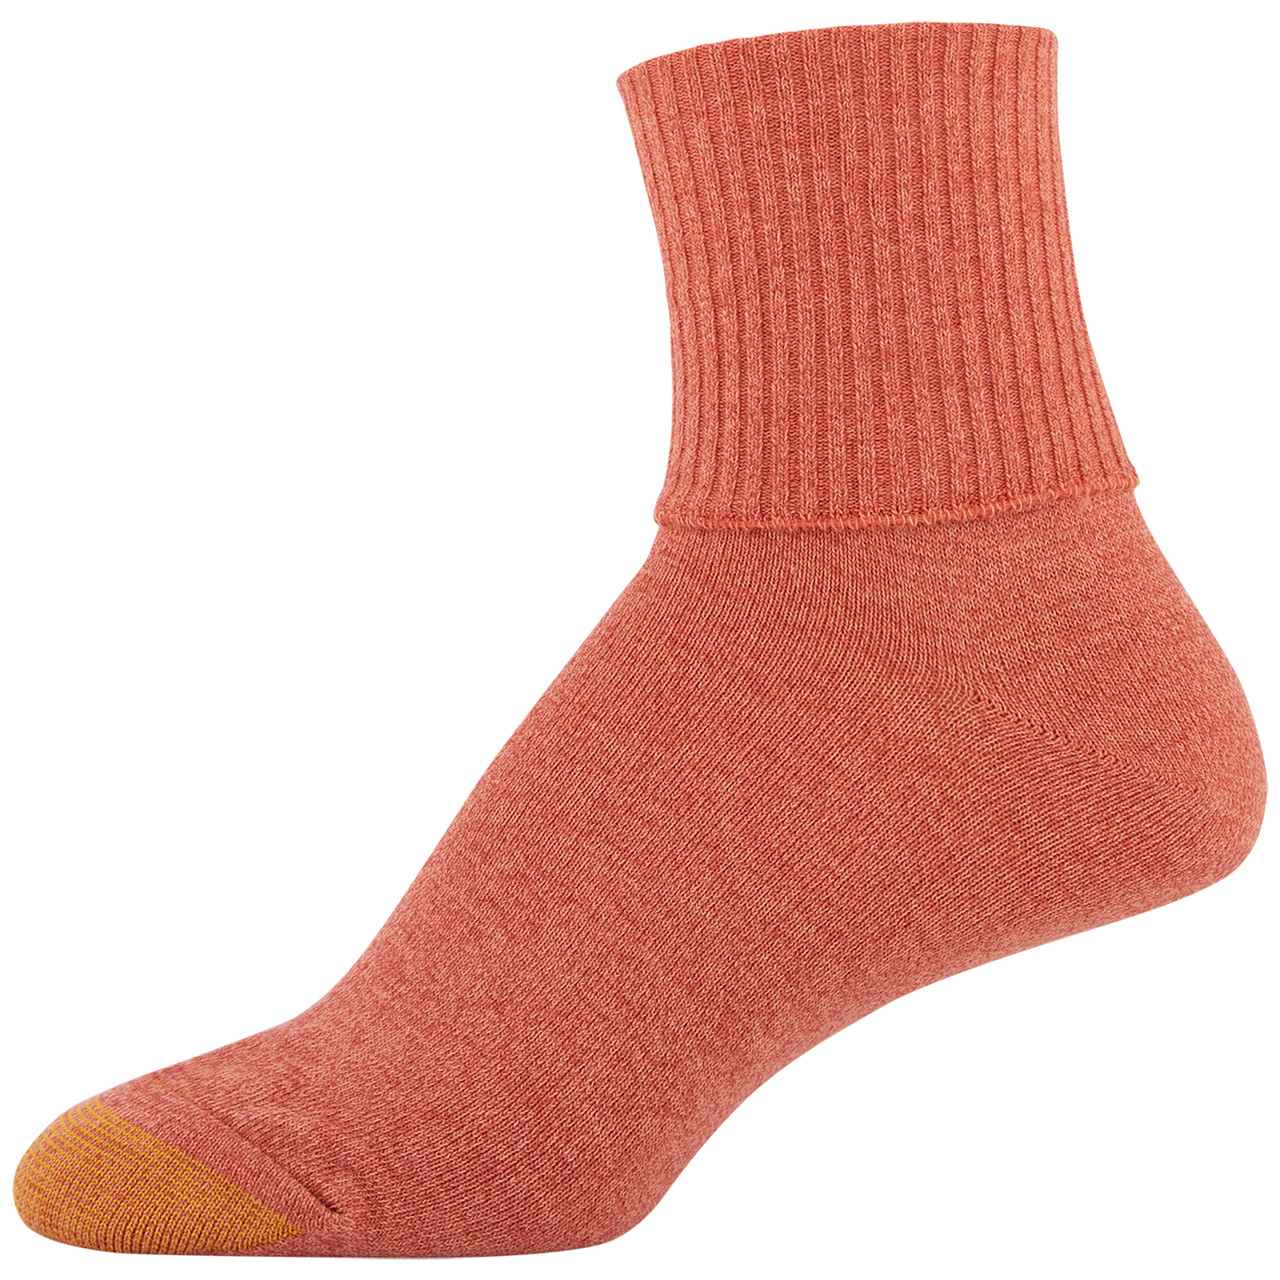 Women's Classic Turn Cuff Socks, 6 Pairs